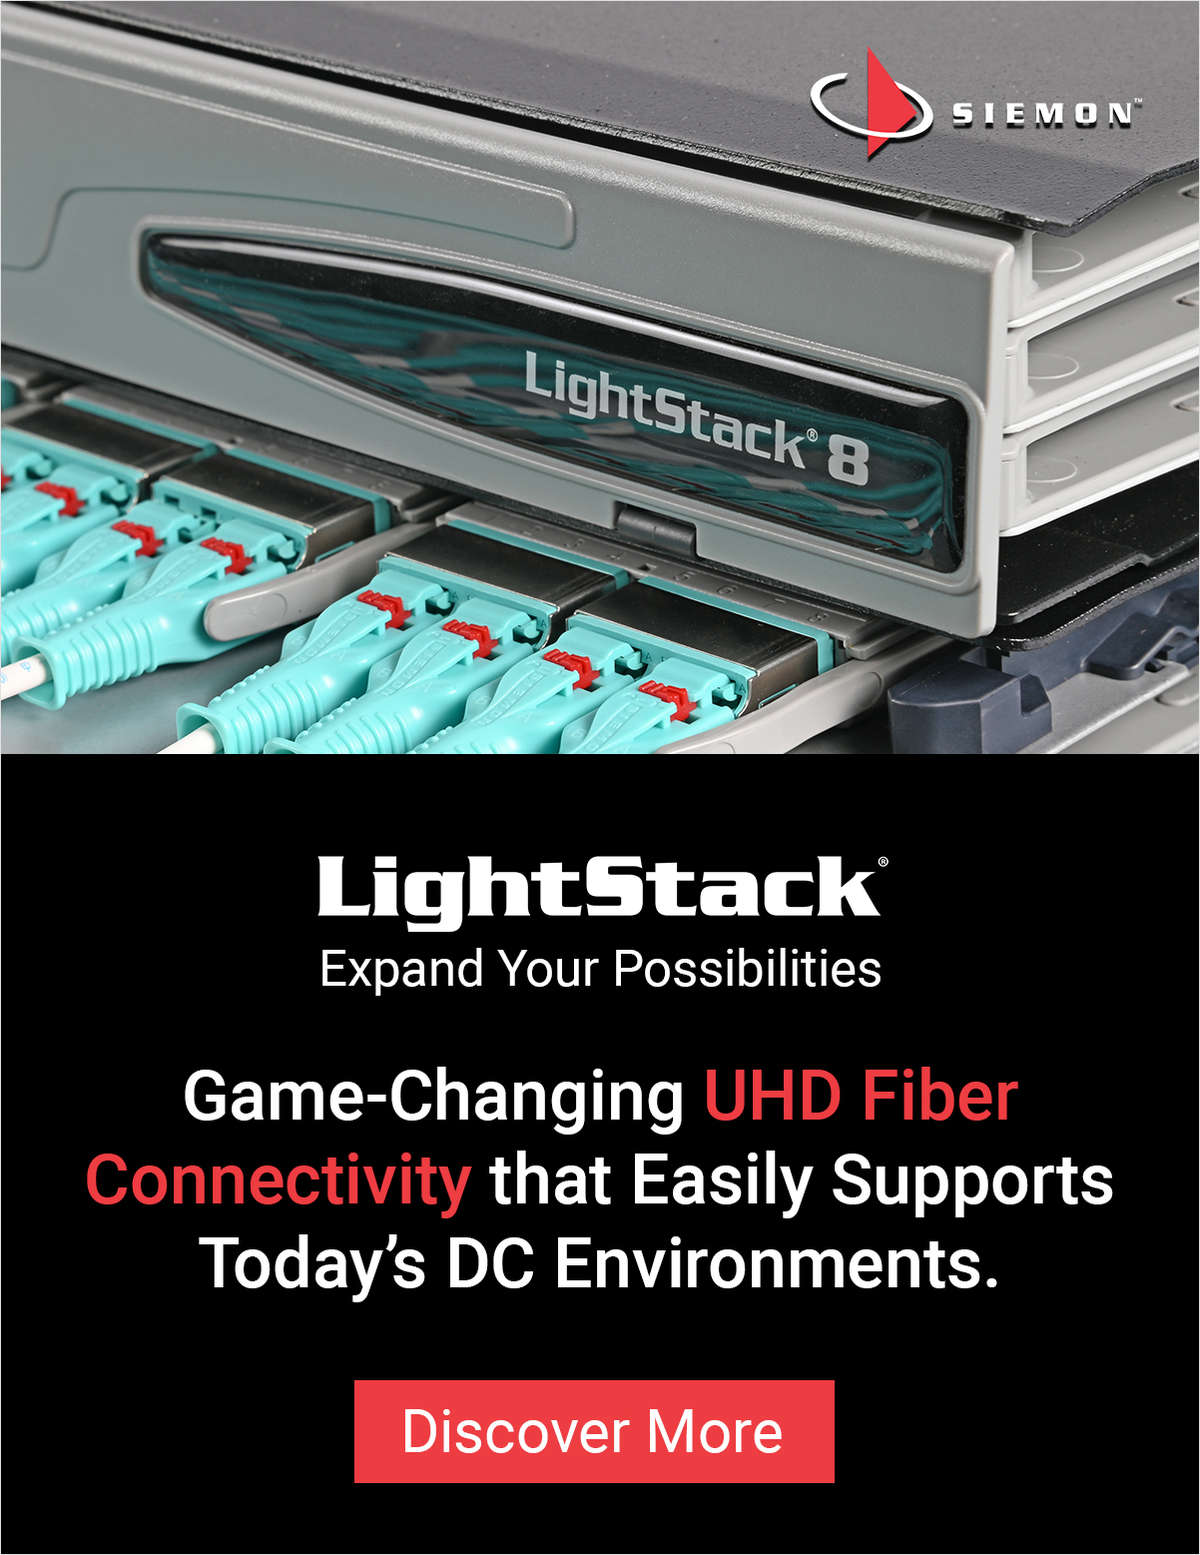 Siemon's LightStack® and LightStack 8 ultra-high-density fiber Plug and Play system.